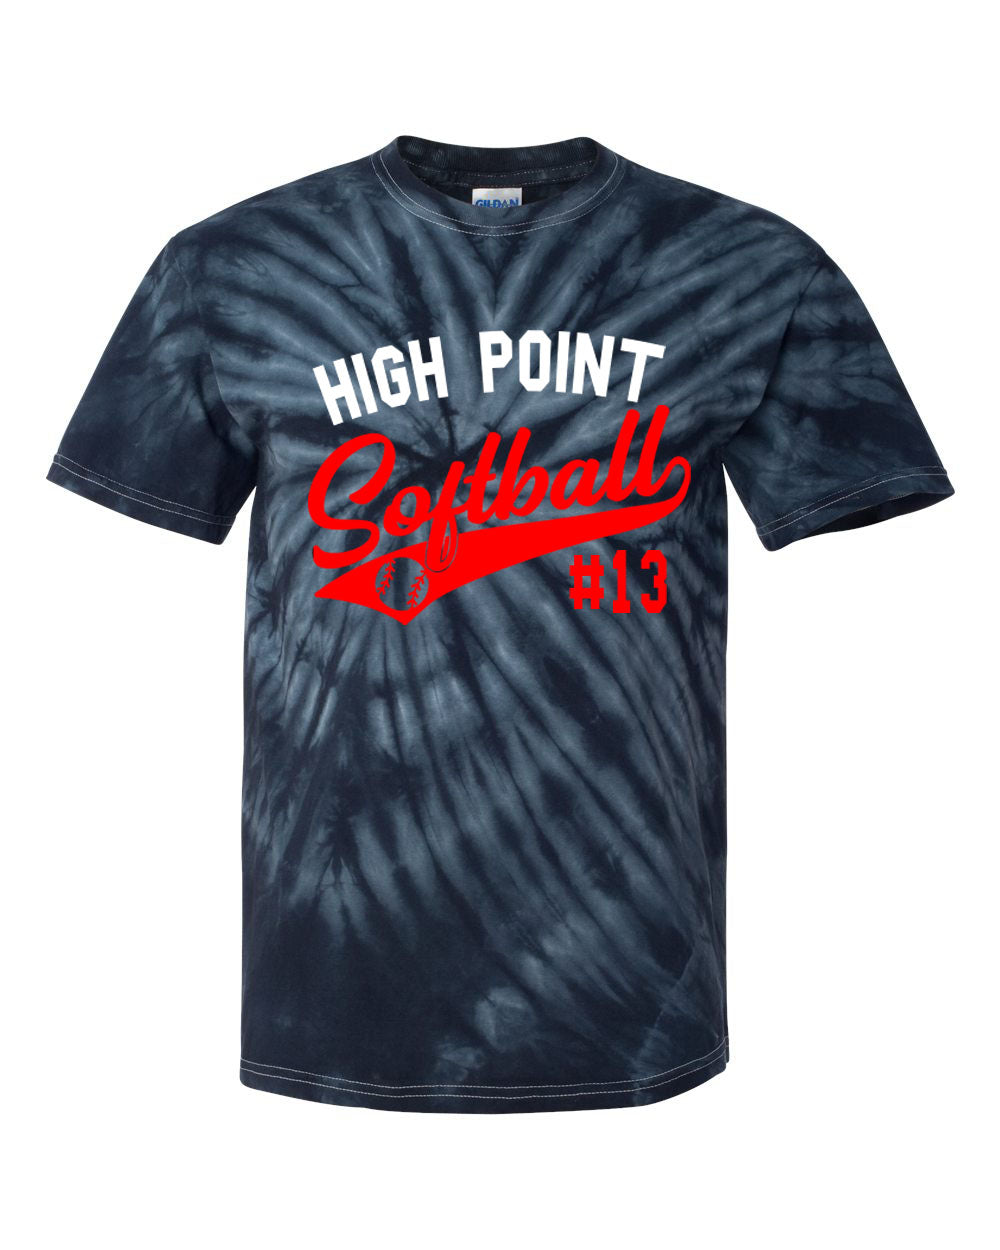 High Point Softball Tie Dye t-shirt Design 2